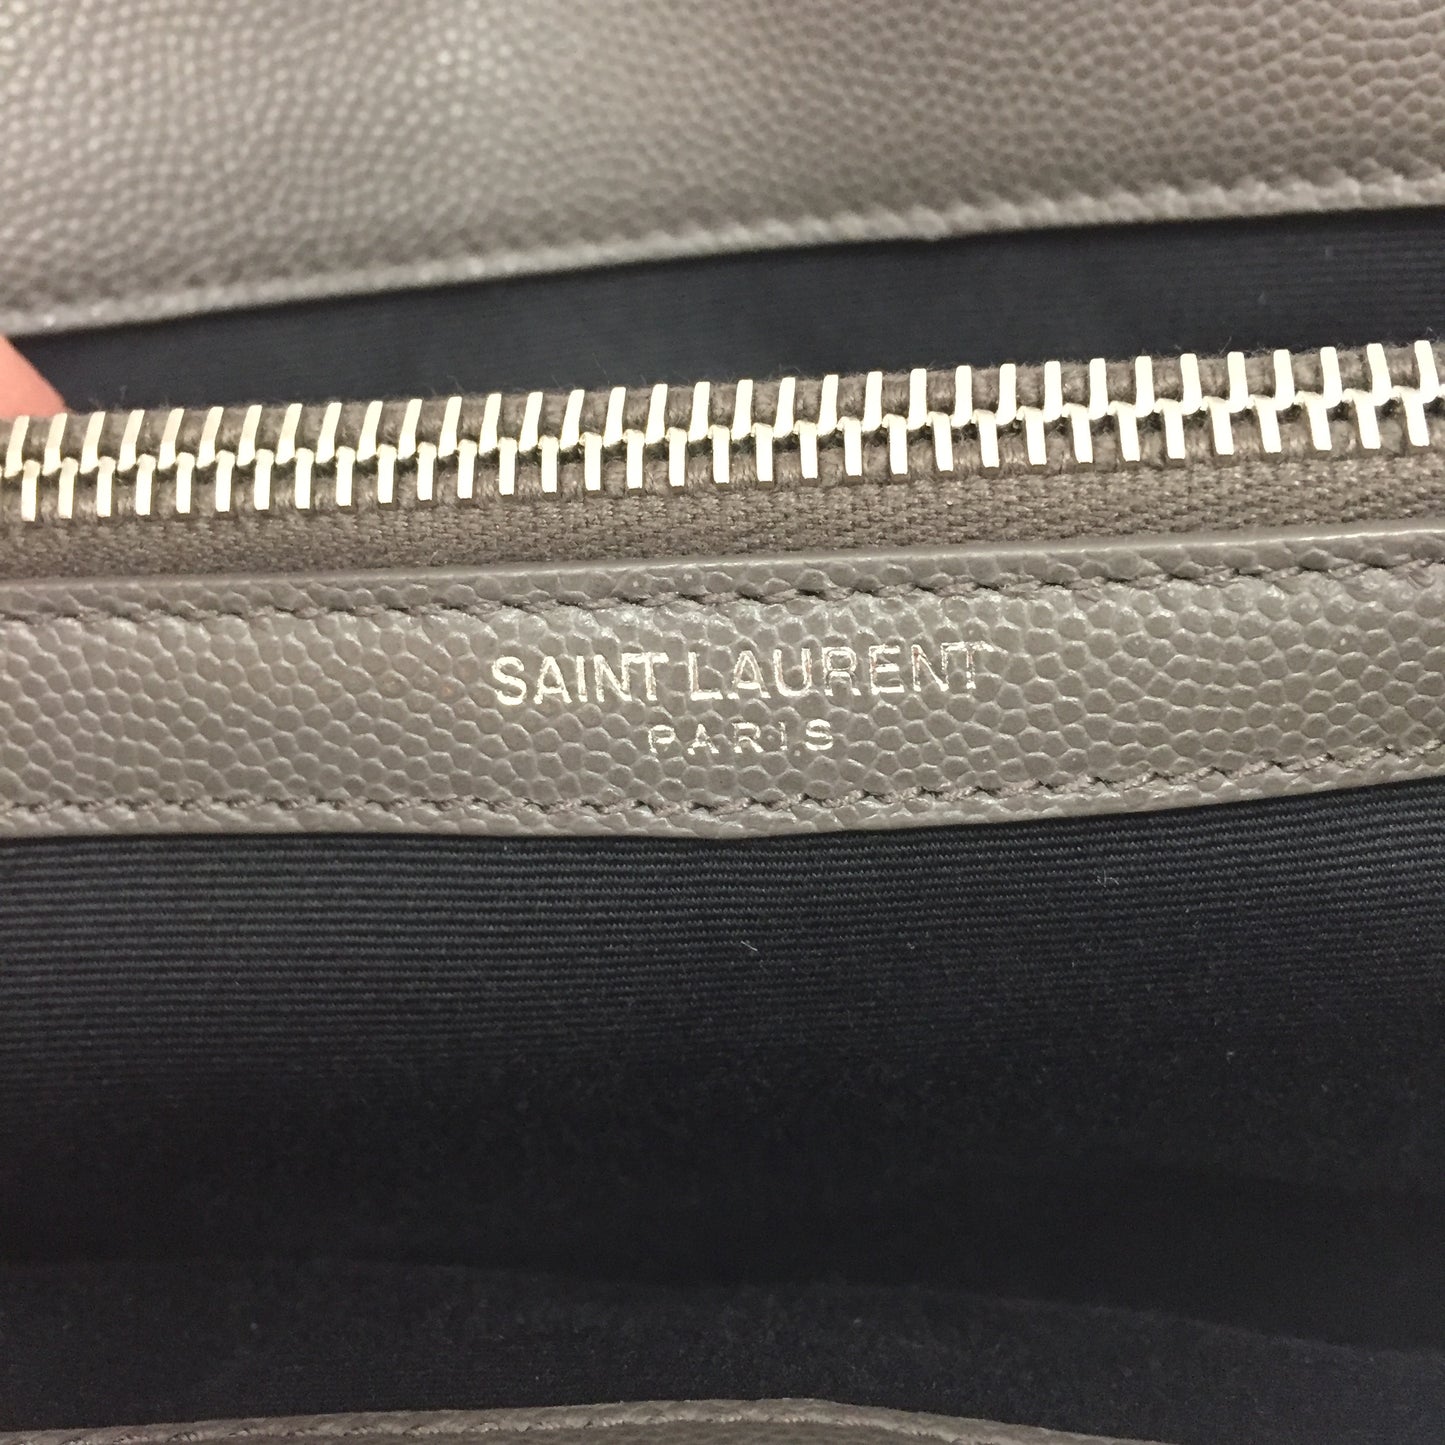 Authentic Saint Laurent Medium West Hollywood Bag- Earth